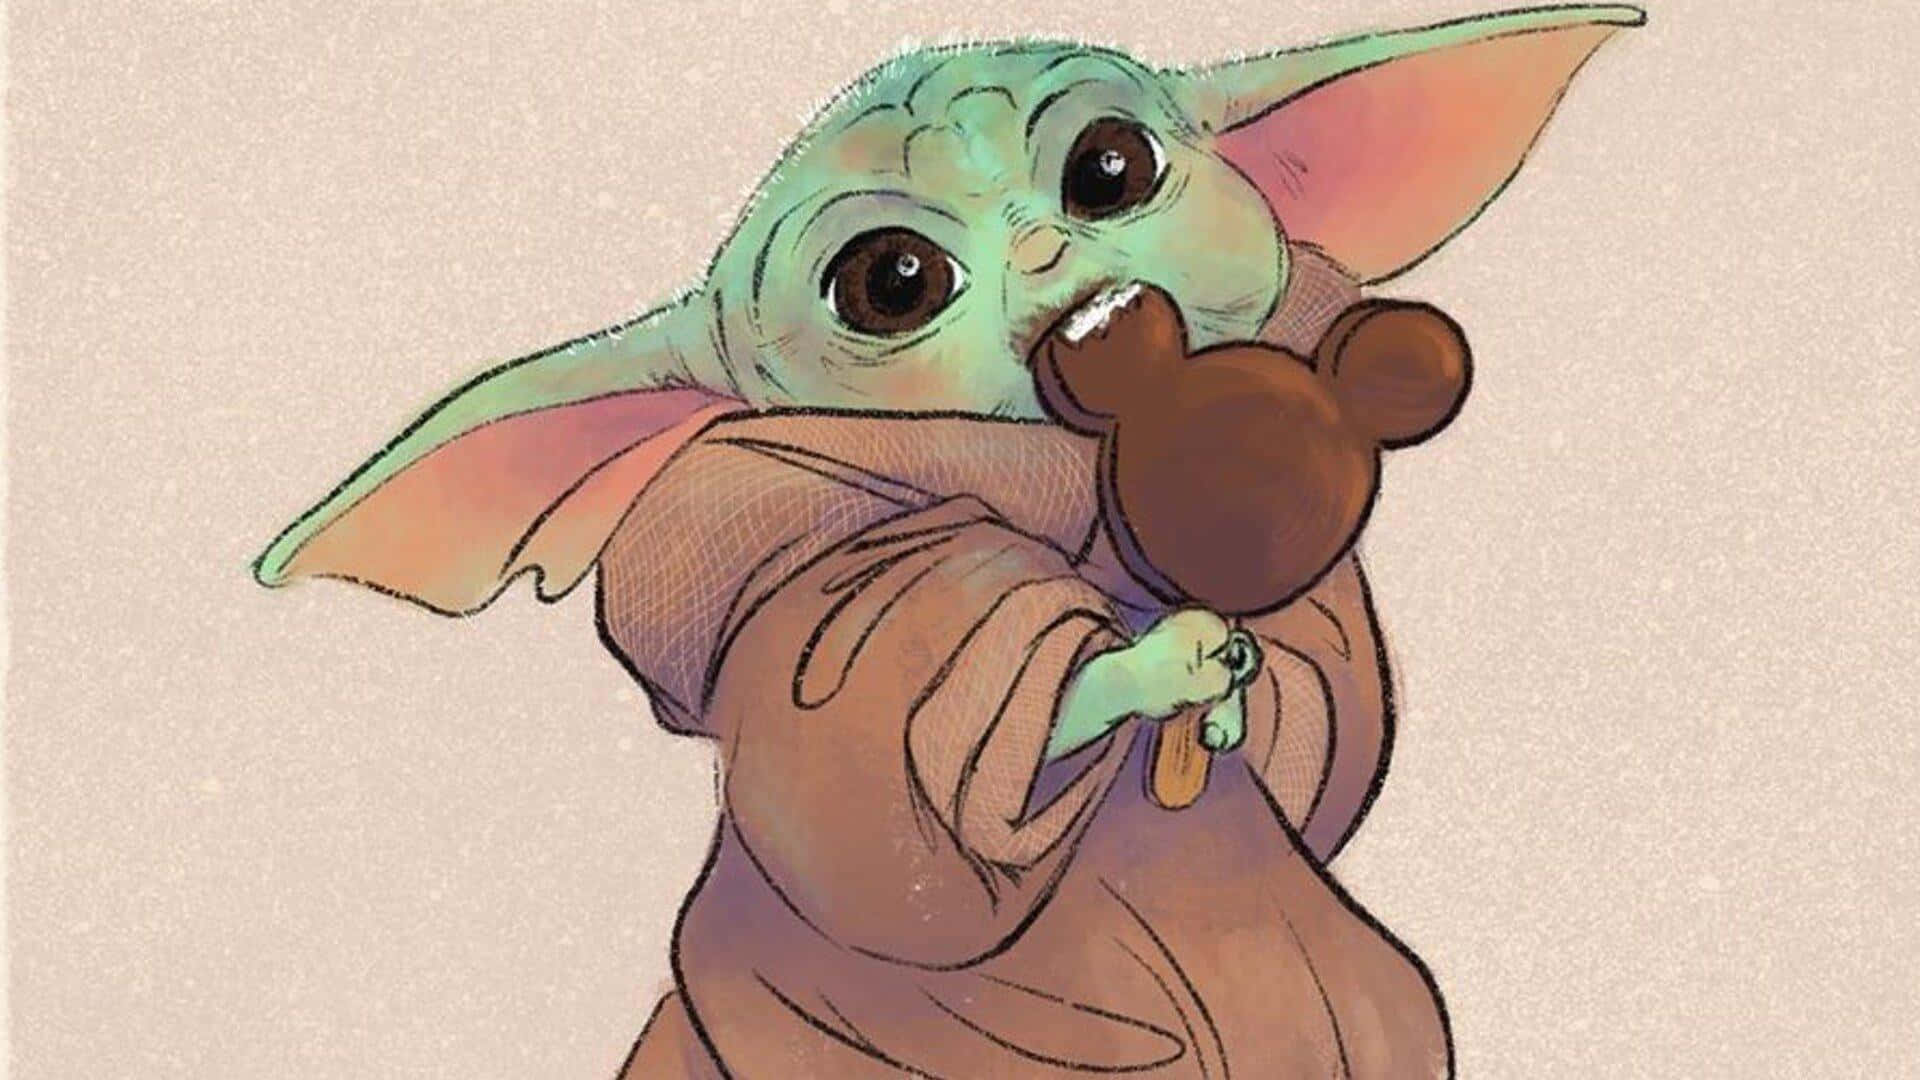 Free Baby Yoda Cartoon Wallpaper Downloads, [100+] Baby Yoda Cartoon  Wallpapers for FREE 